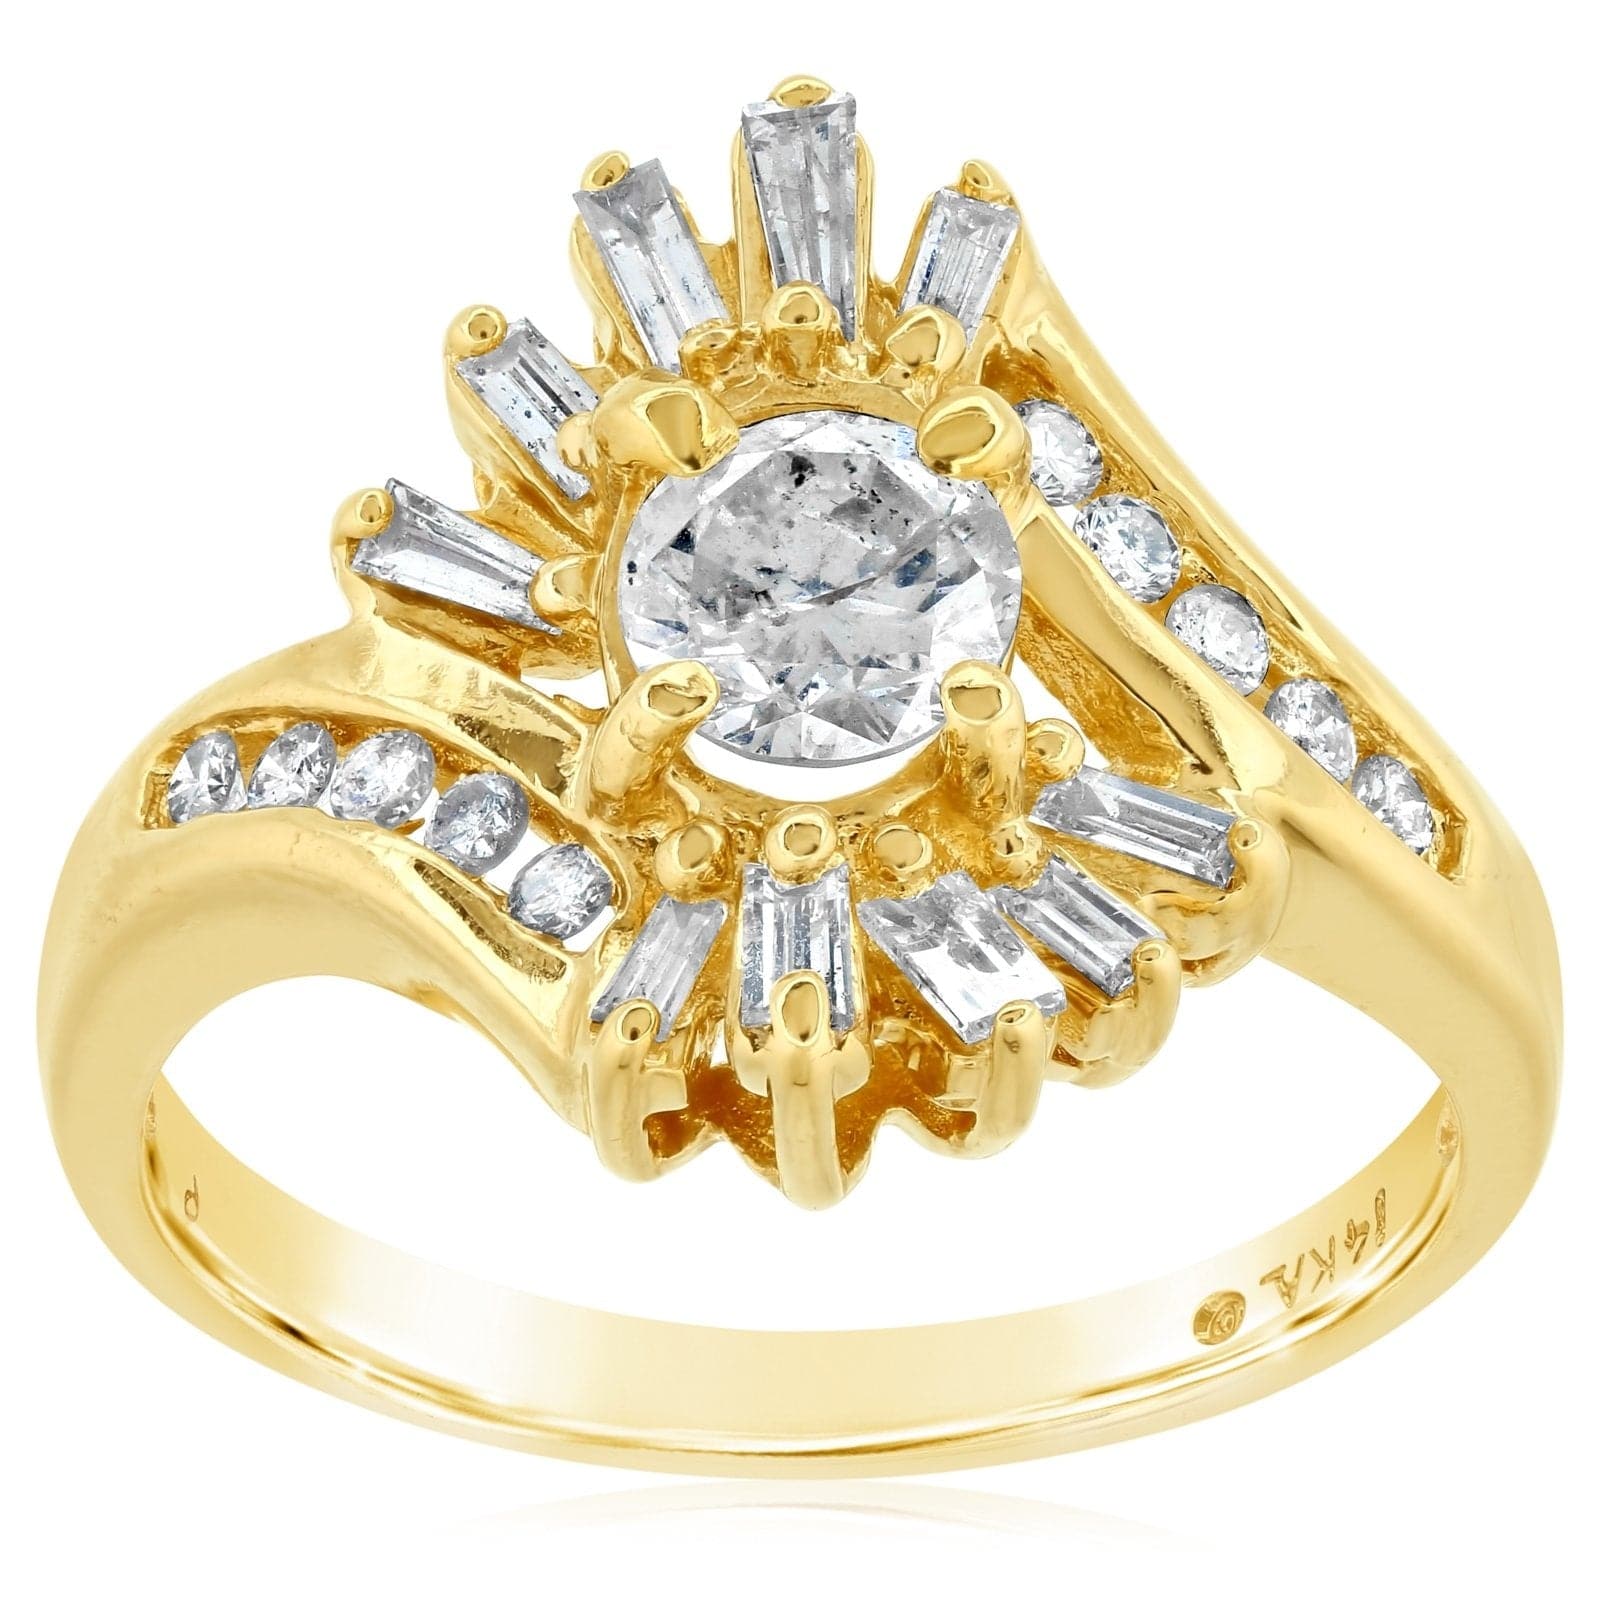 Shop Sublime Grace 18K Gold Diamond Ring for Women | Gehna